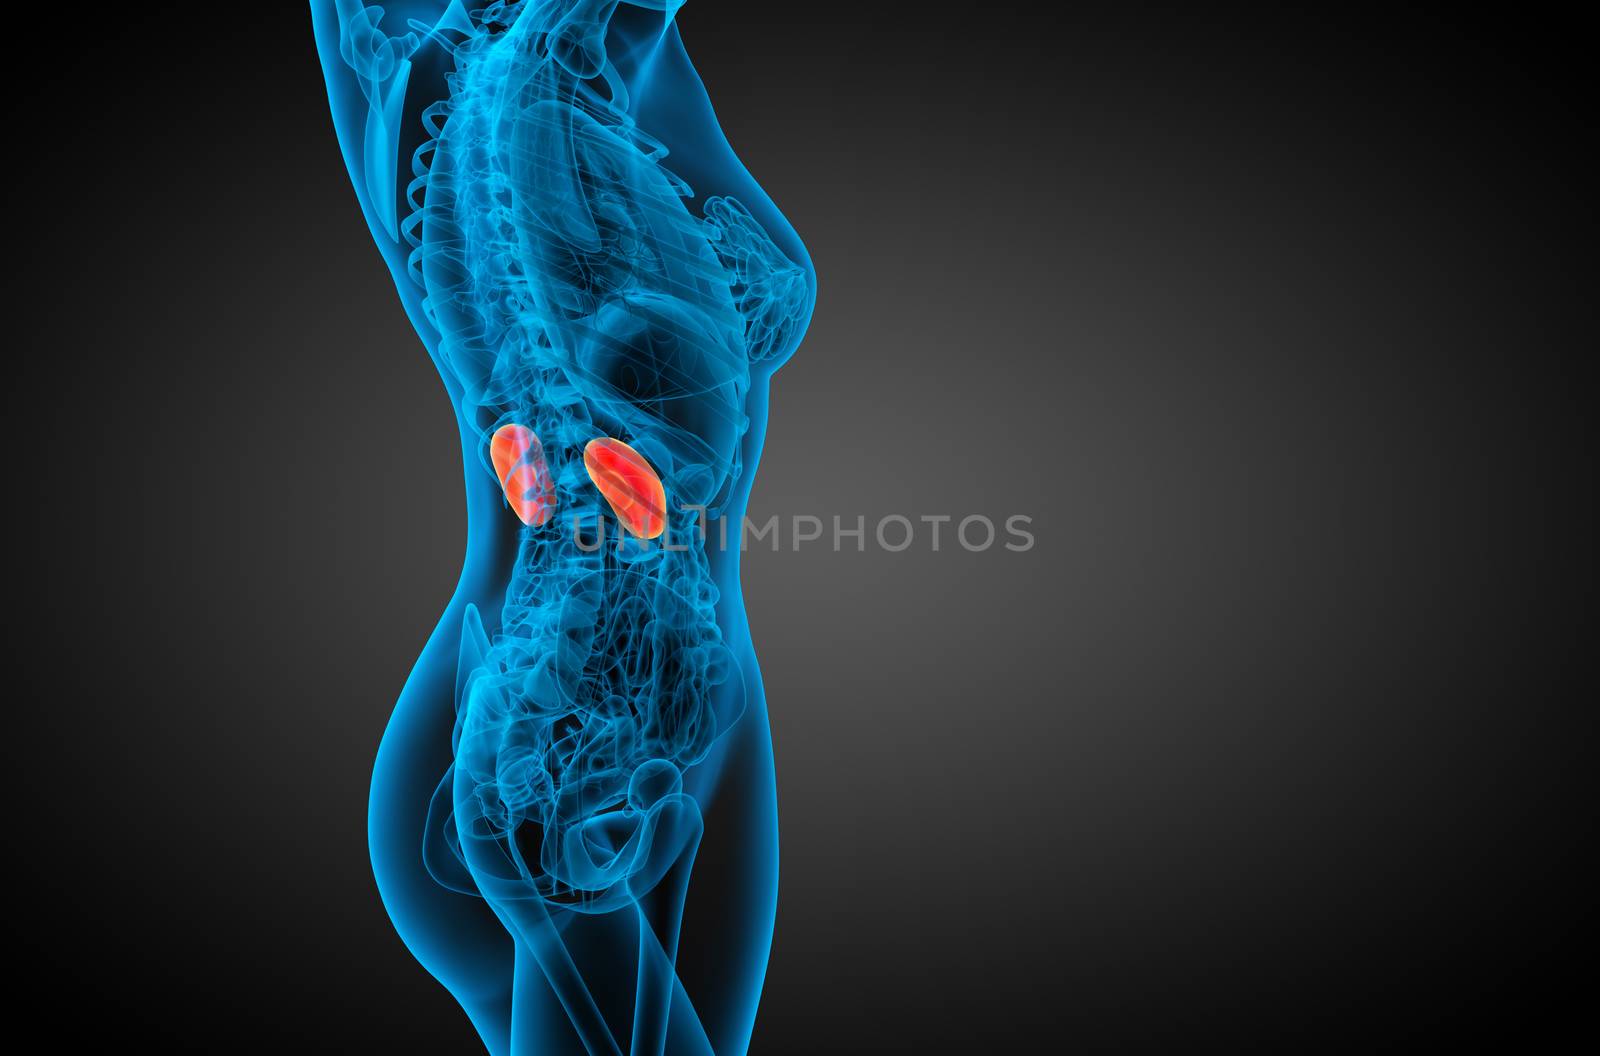 3d render medical illustration of the human kidney by maya2008